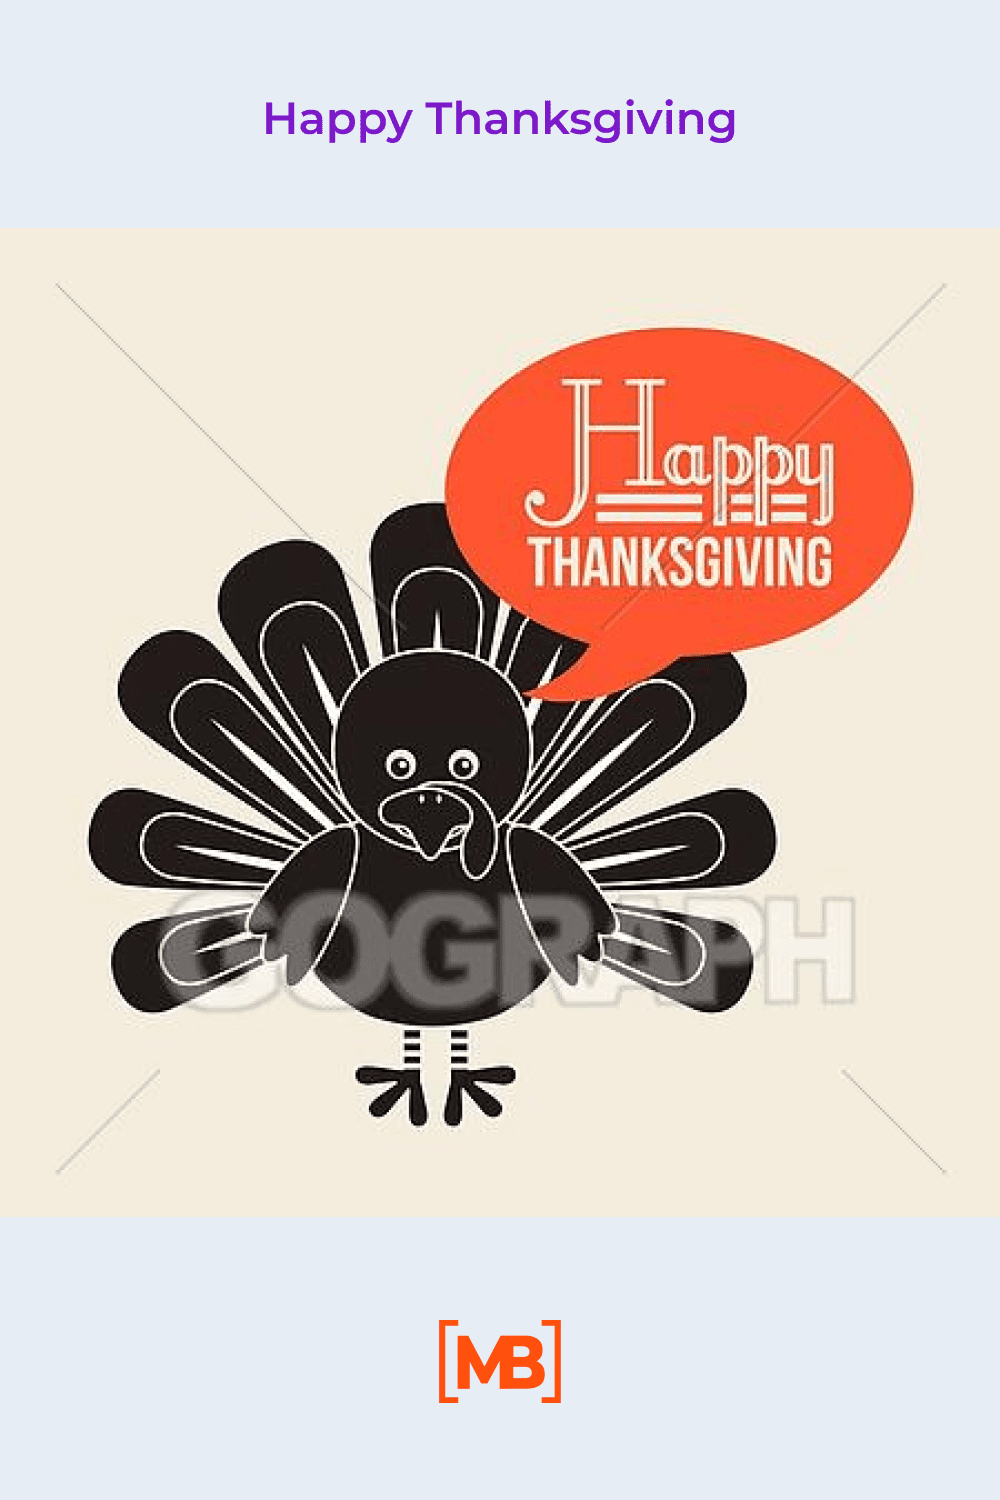 Happy Thanksgiving illustrations.